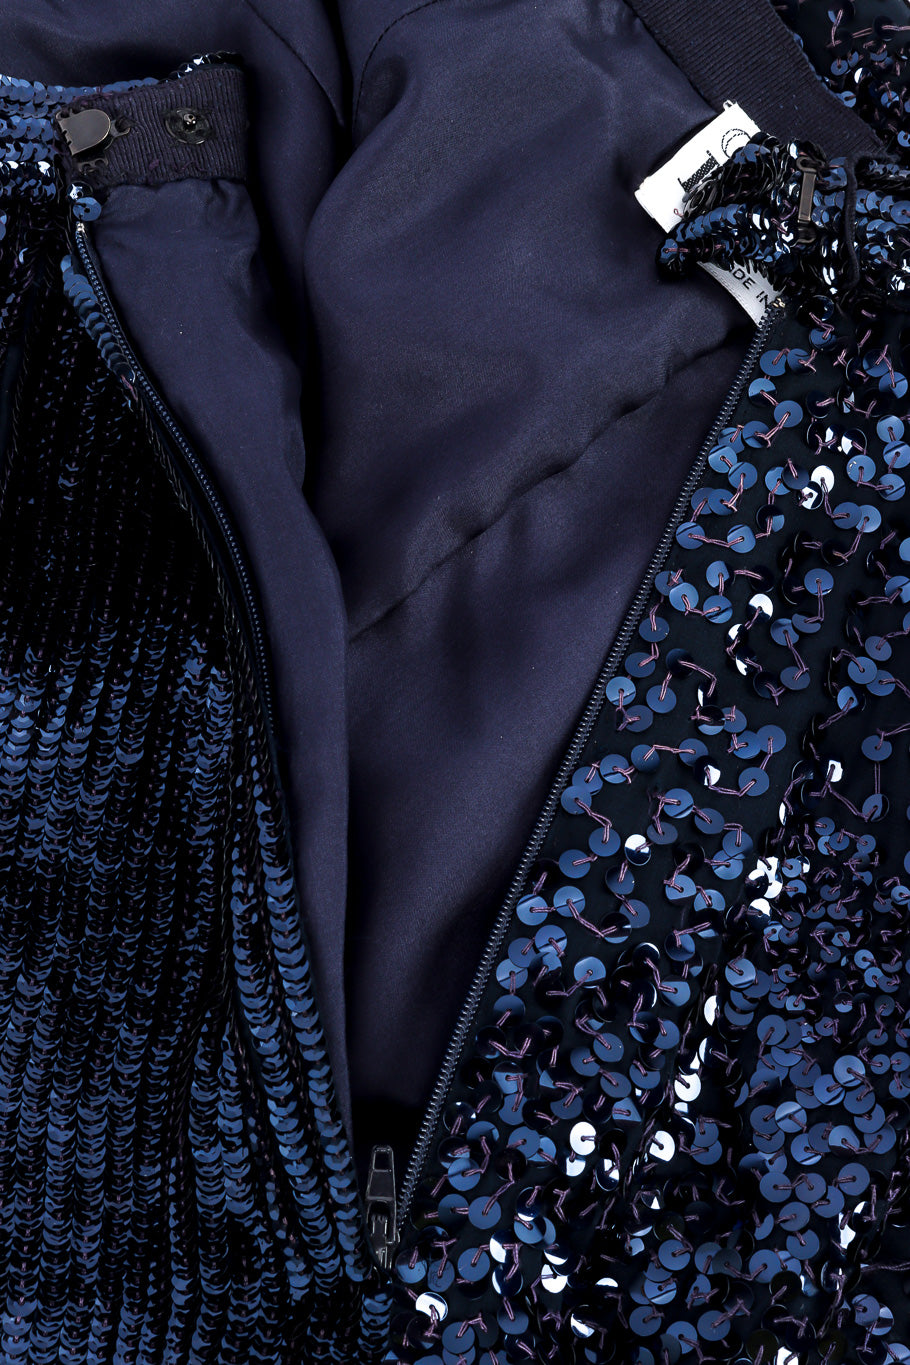 Midnight sequin skirt by Gianfranco Ferre zipper @recessla